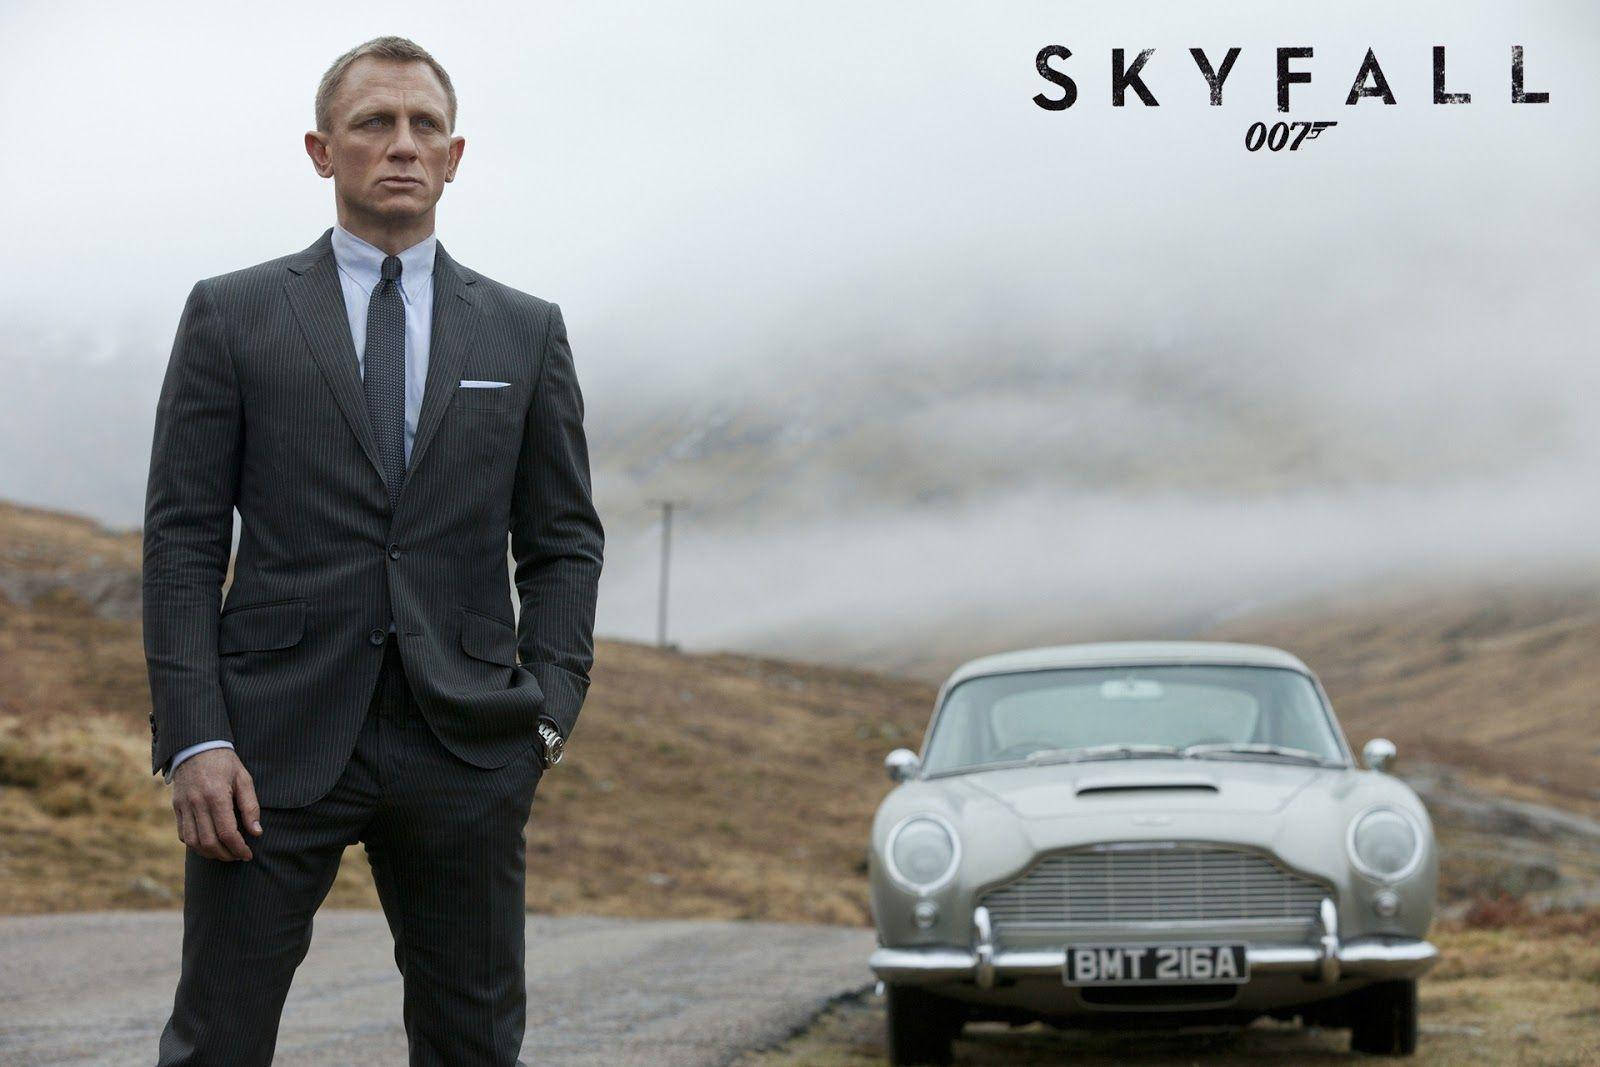 Jamesbond Skyfall 007 - James Bond Skyfall 007 Wallpaper